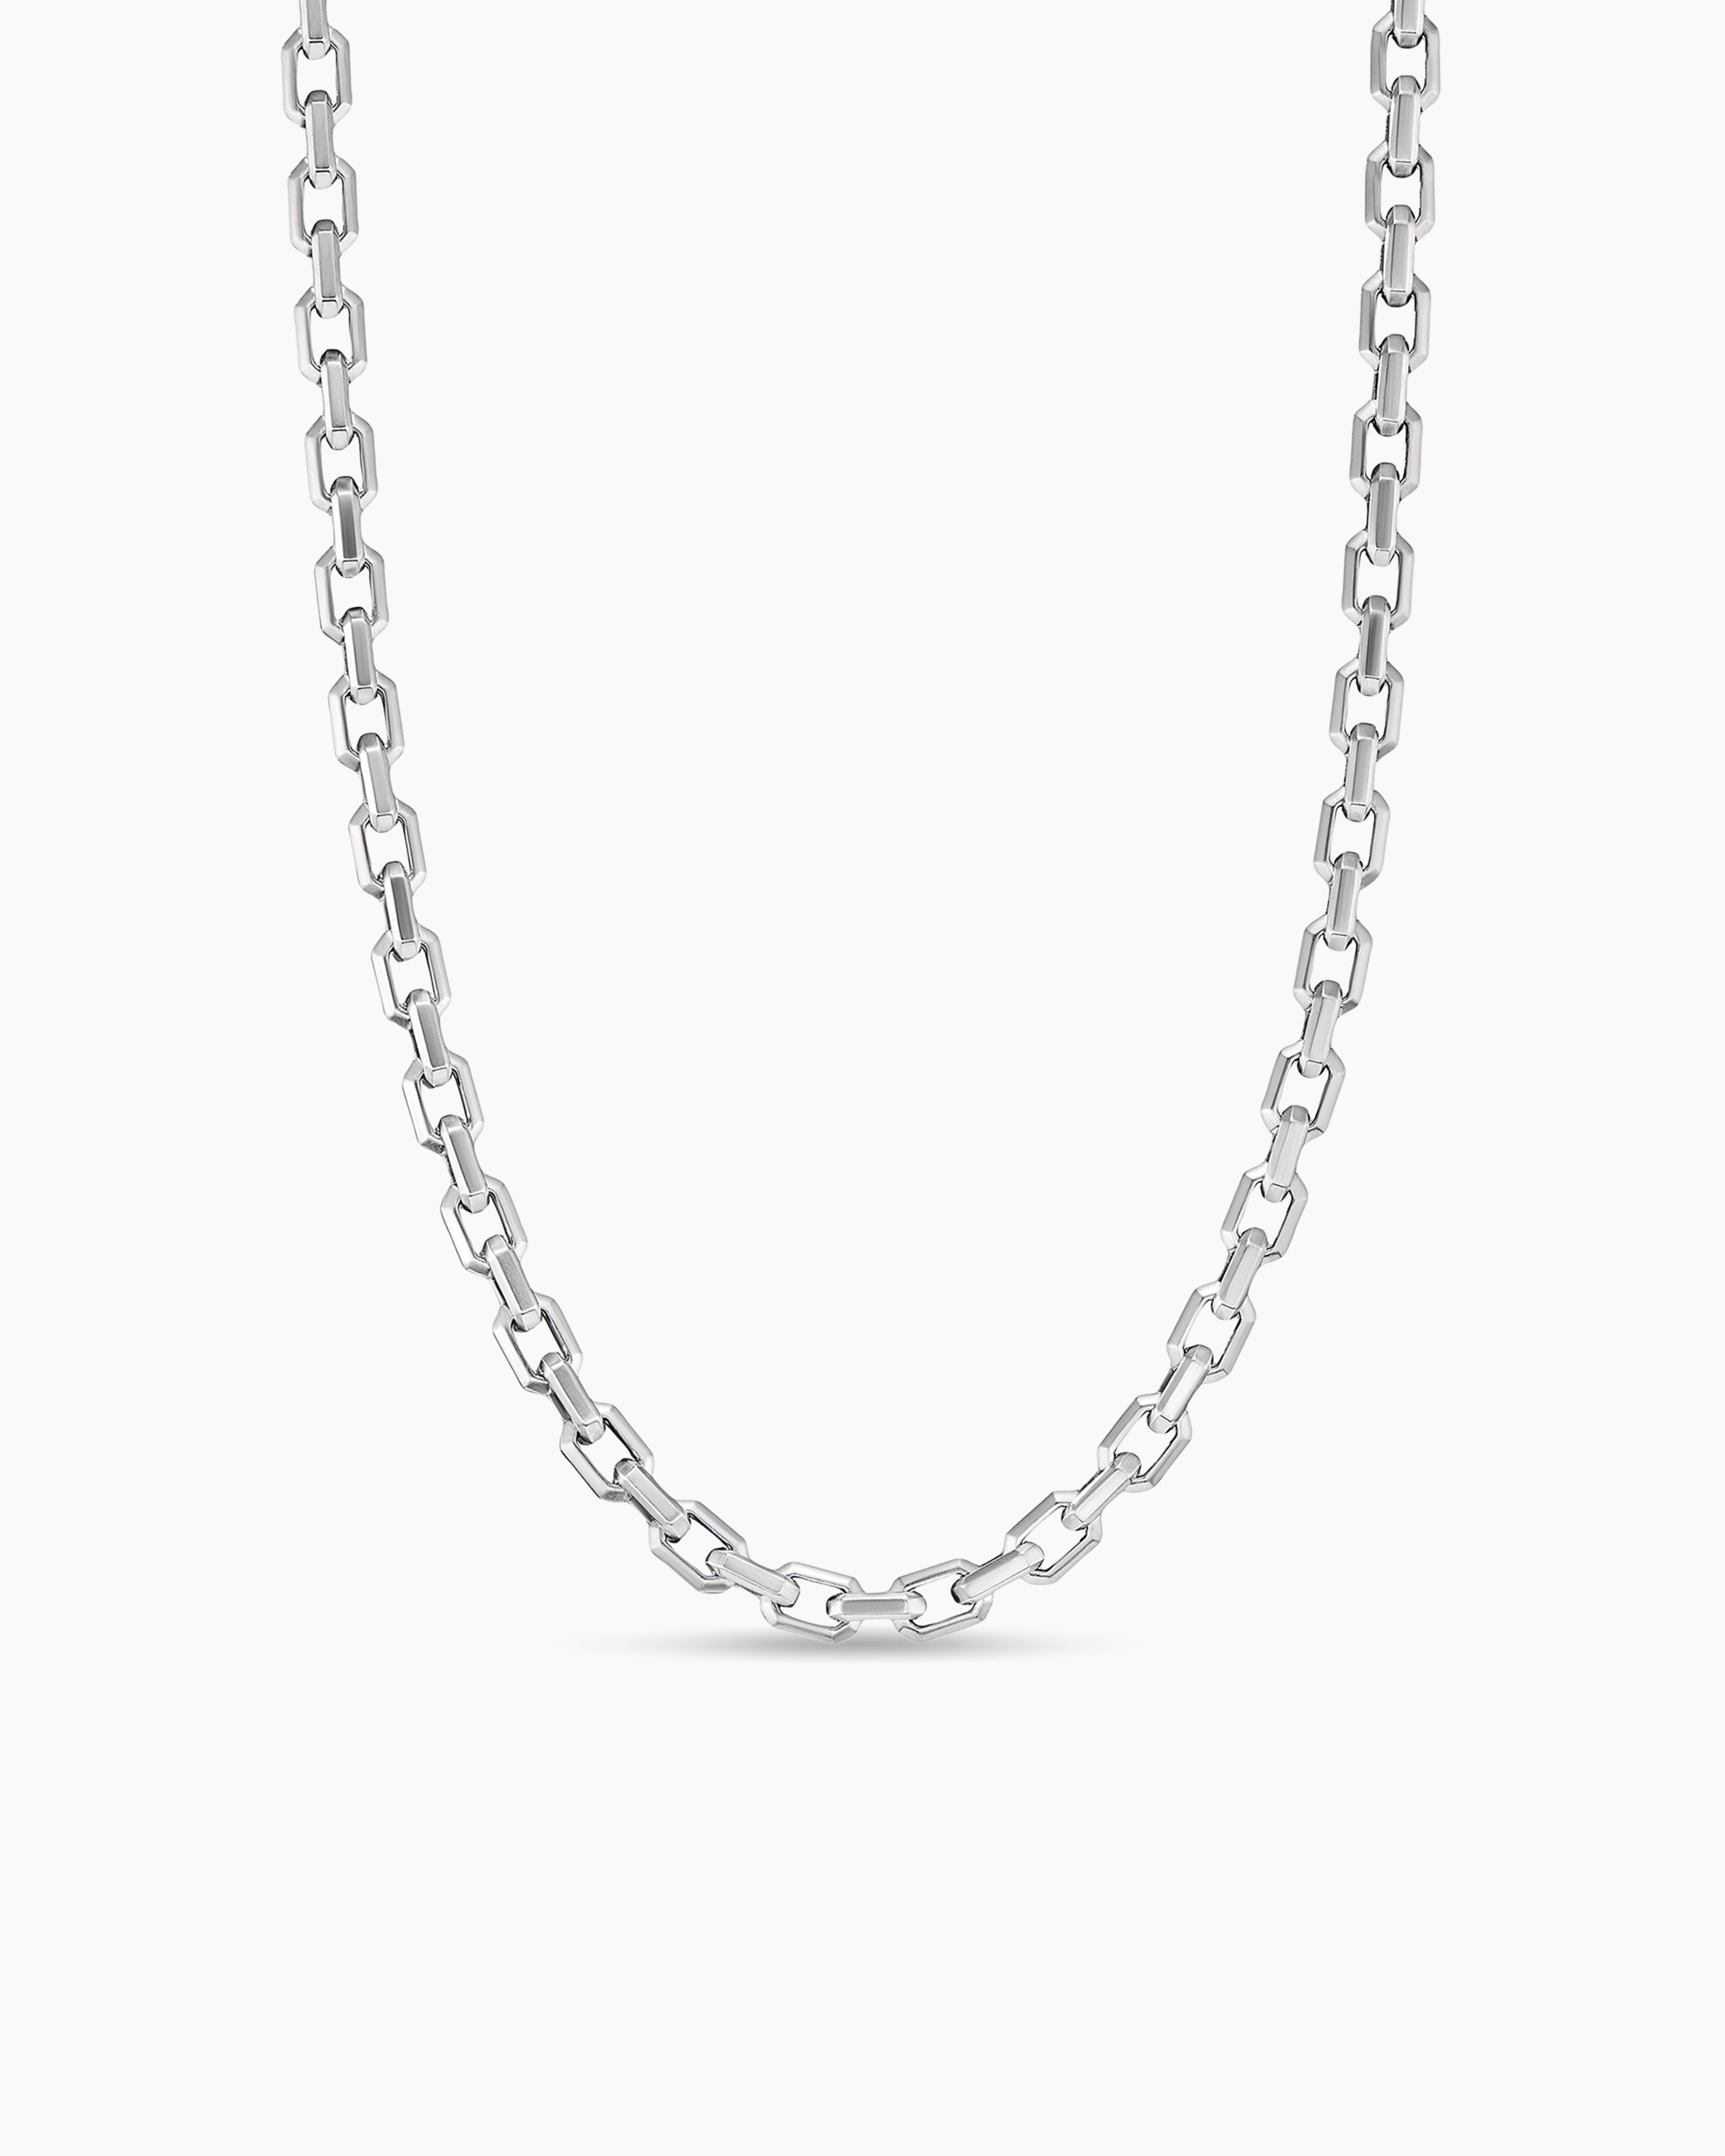 Kit Heath Sterling Silver Necklace 001-610-01146, Rasmussen Diamonds